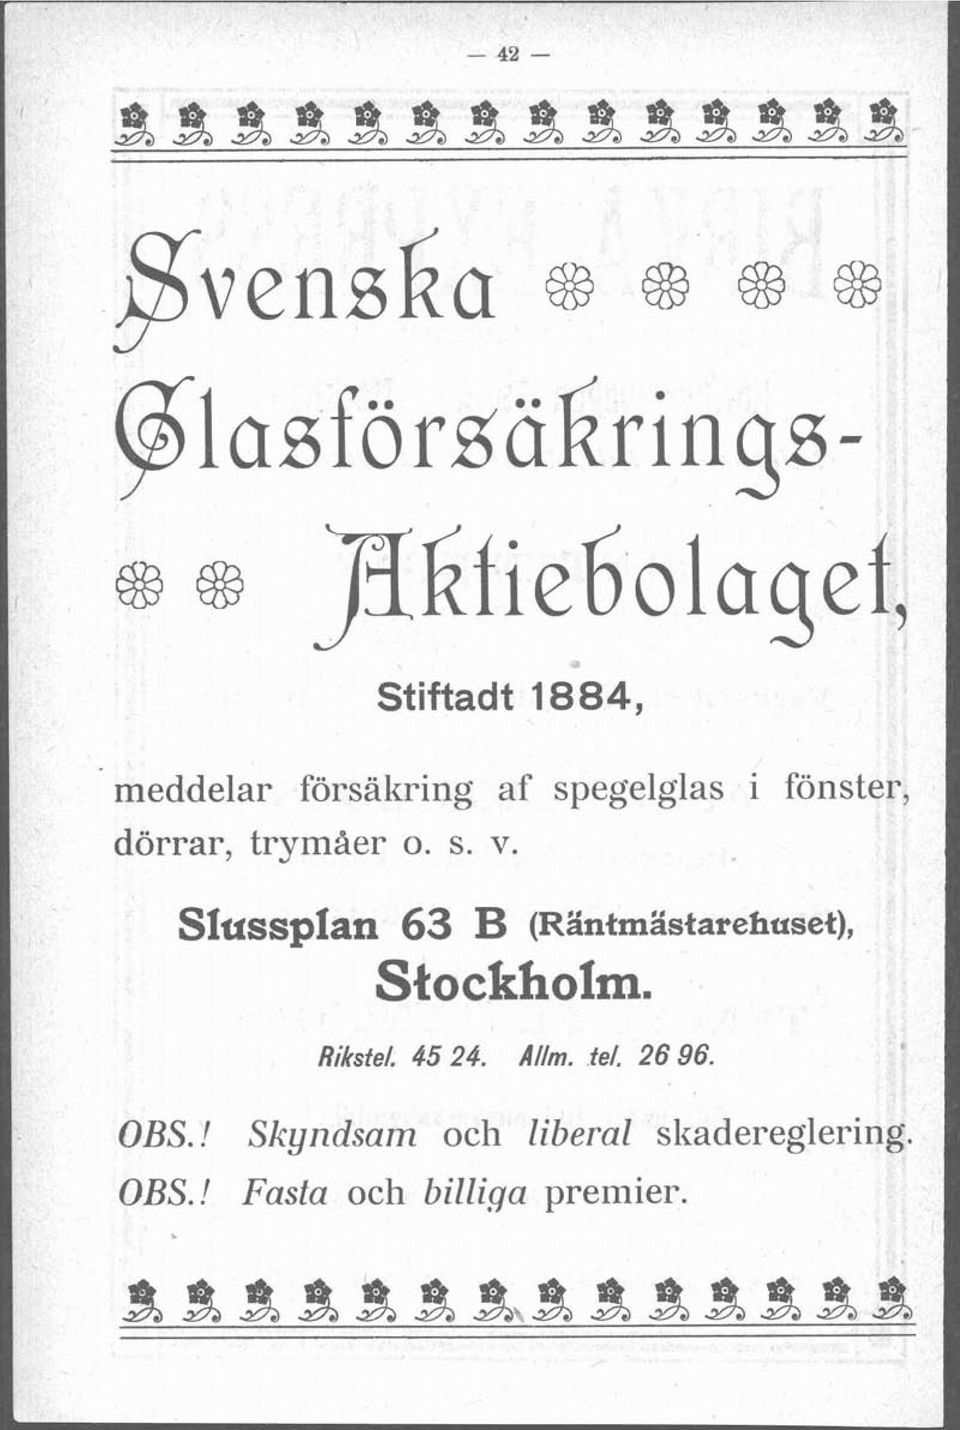 rymaer o. s. v. Slussplan 63 B (Ränmäsarehuse), Sockholm. Riksfel. 45 24. Allm.